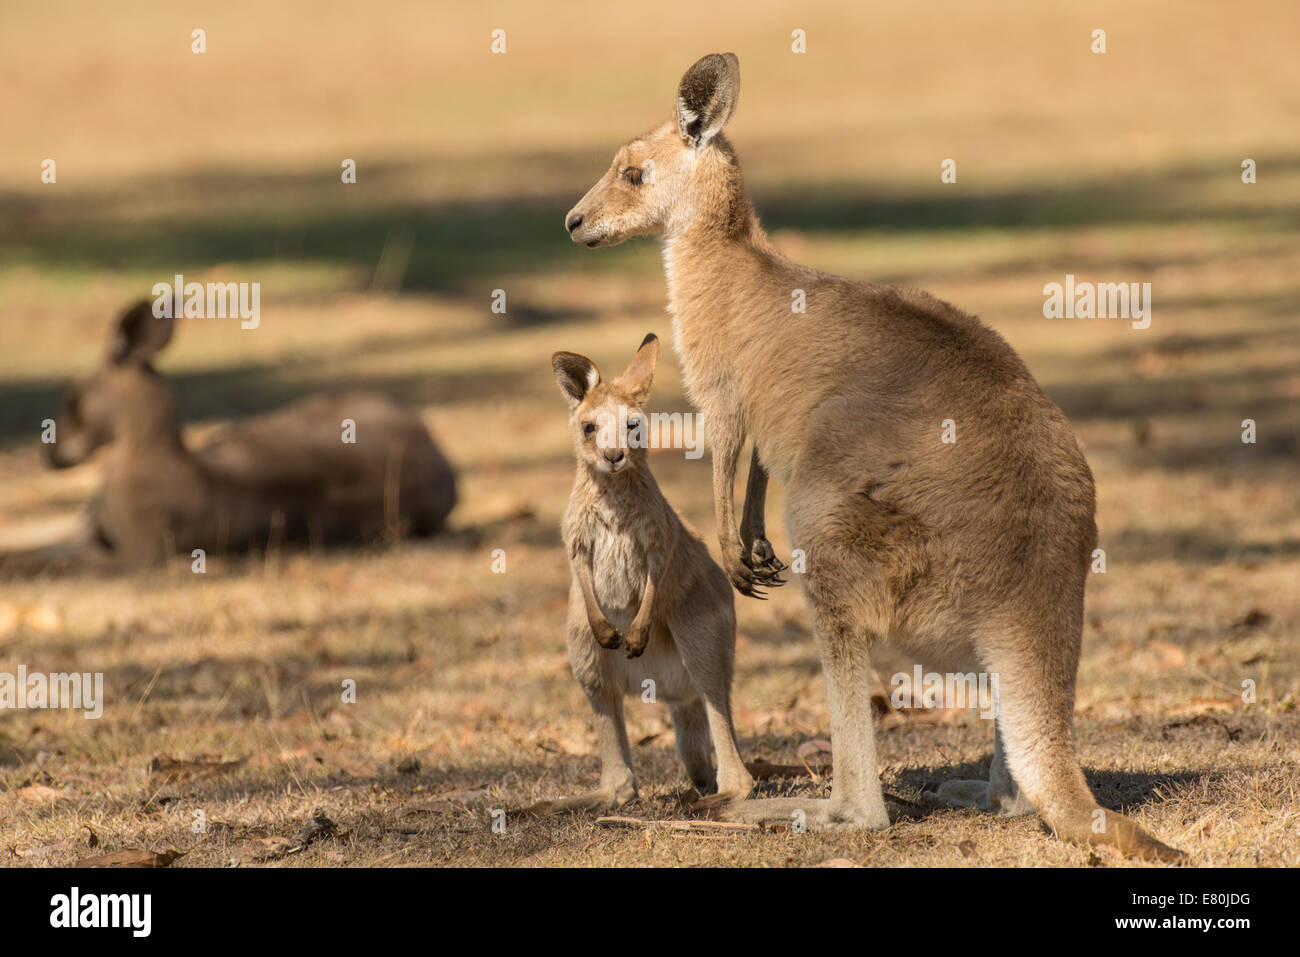 Stock photo of an eastern gray kangaroo joey standing next to his mom. Stock Photo